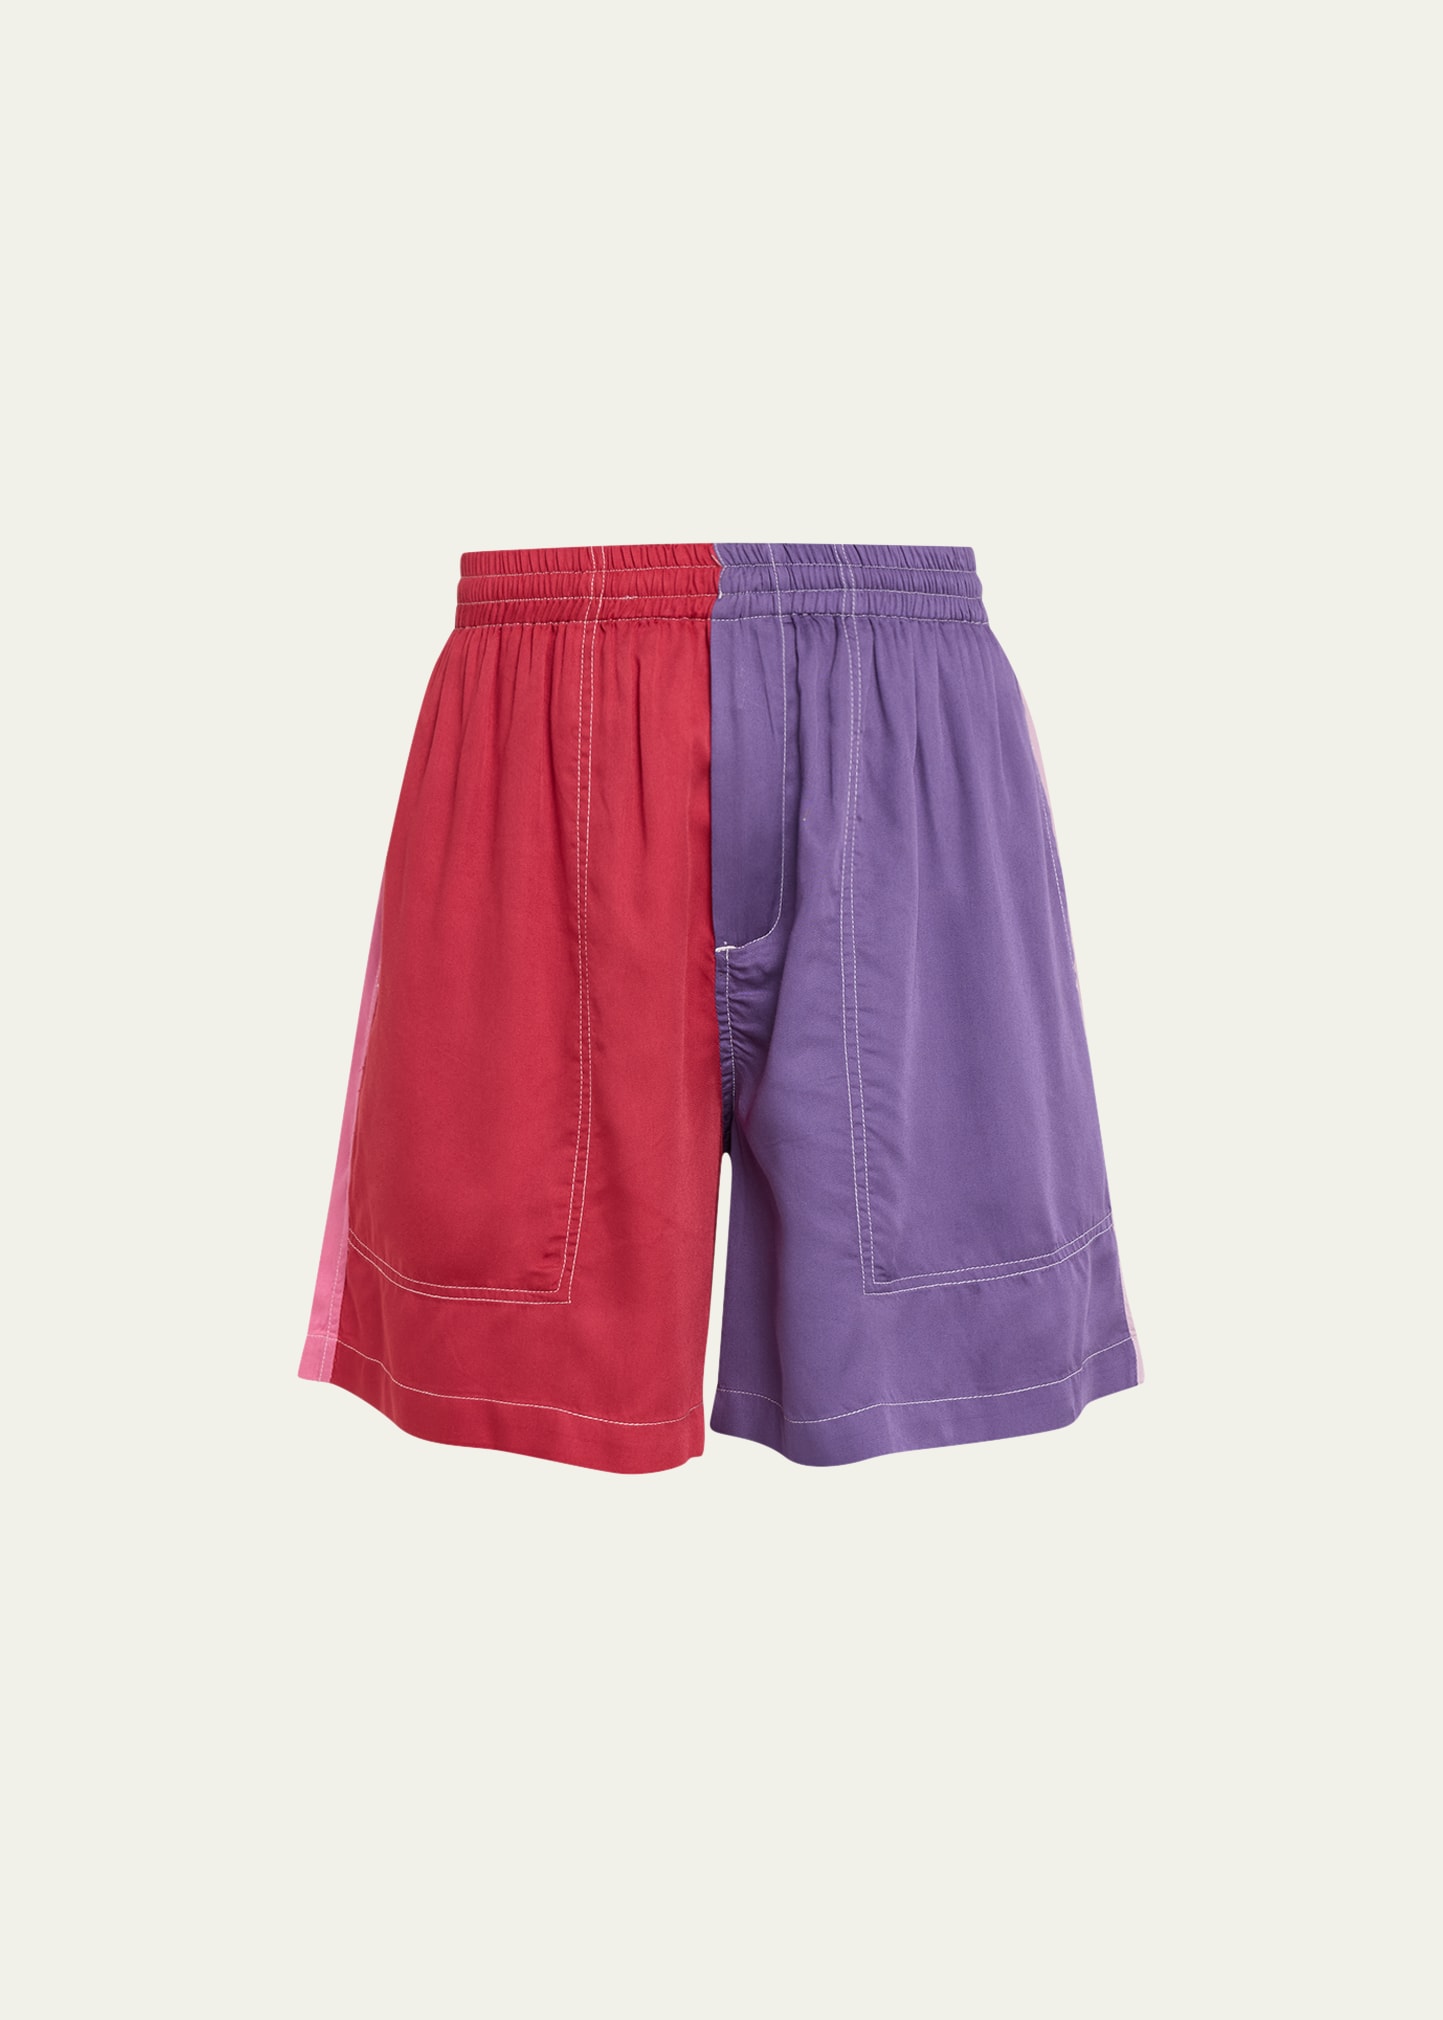 Bode Buckaround Colorblock Shorts In Multi